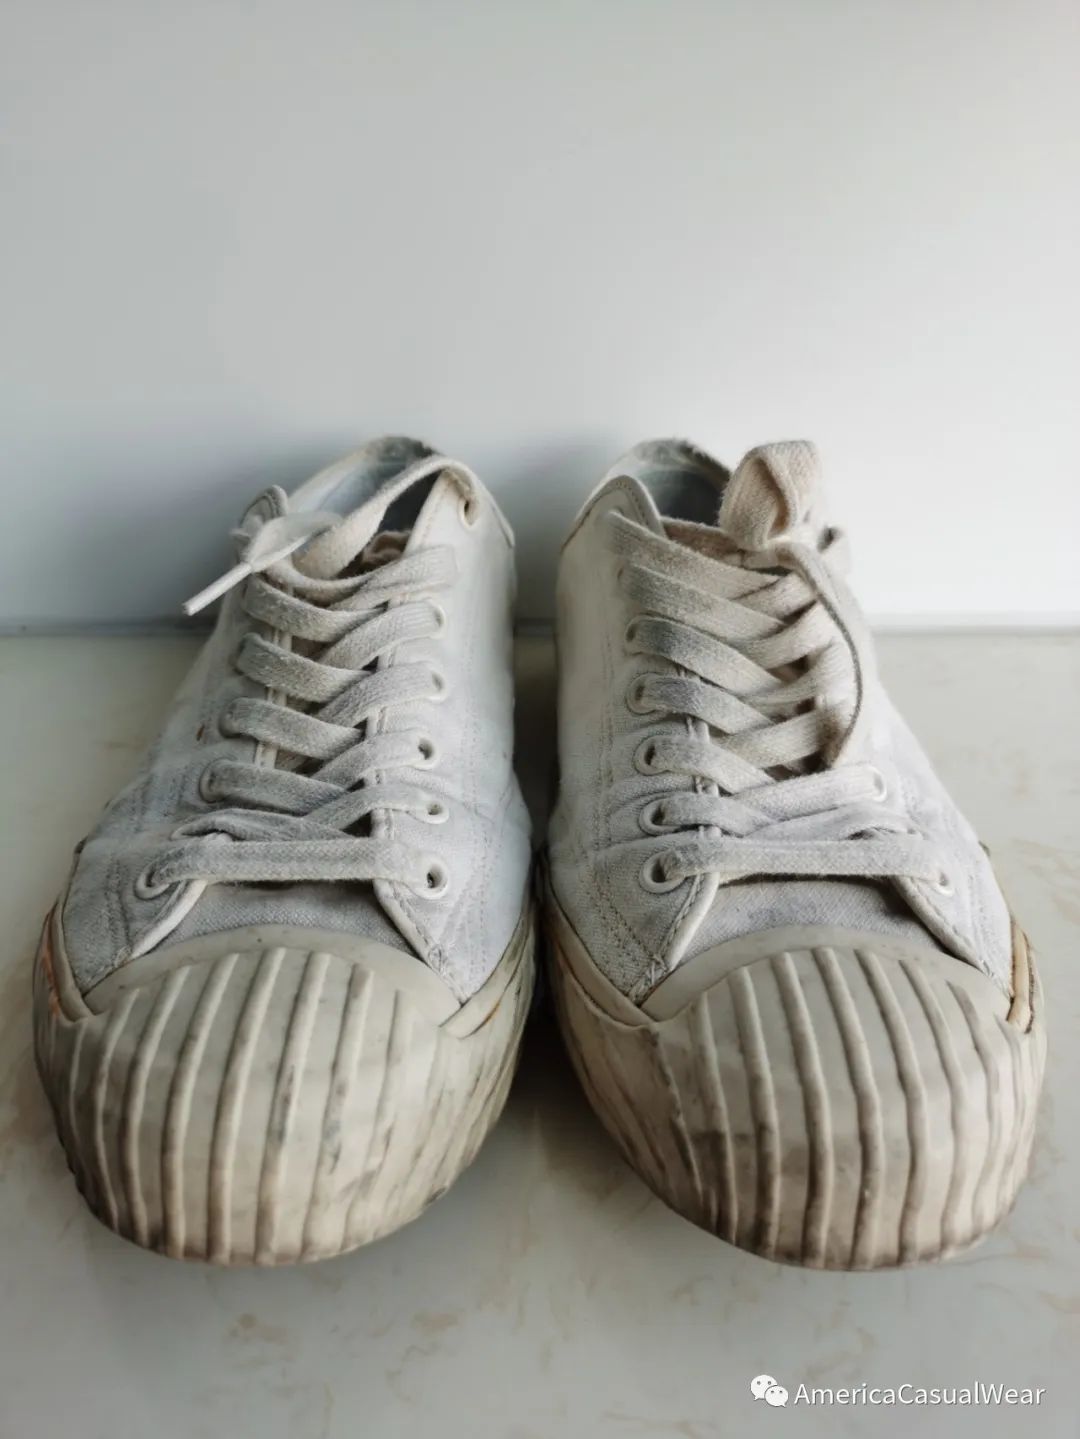 【ACW FADE】略有味道的回忆~来看看大鬼这些年穿过的几双帆布鞋